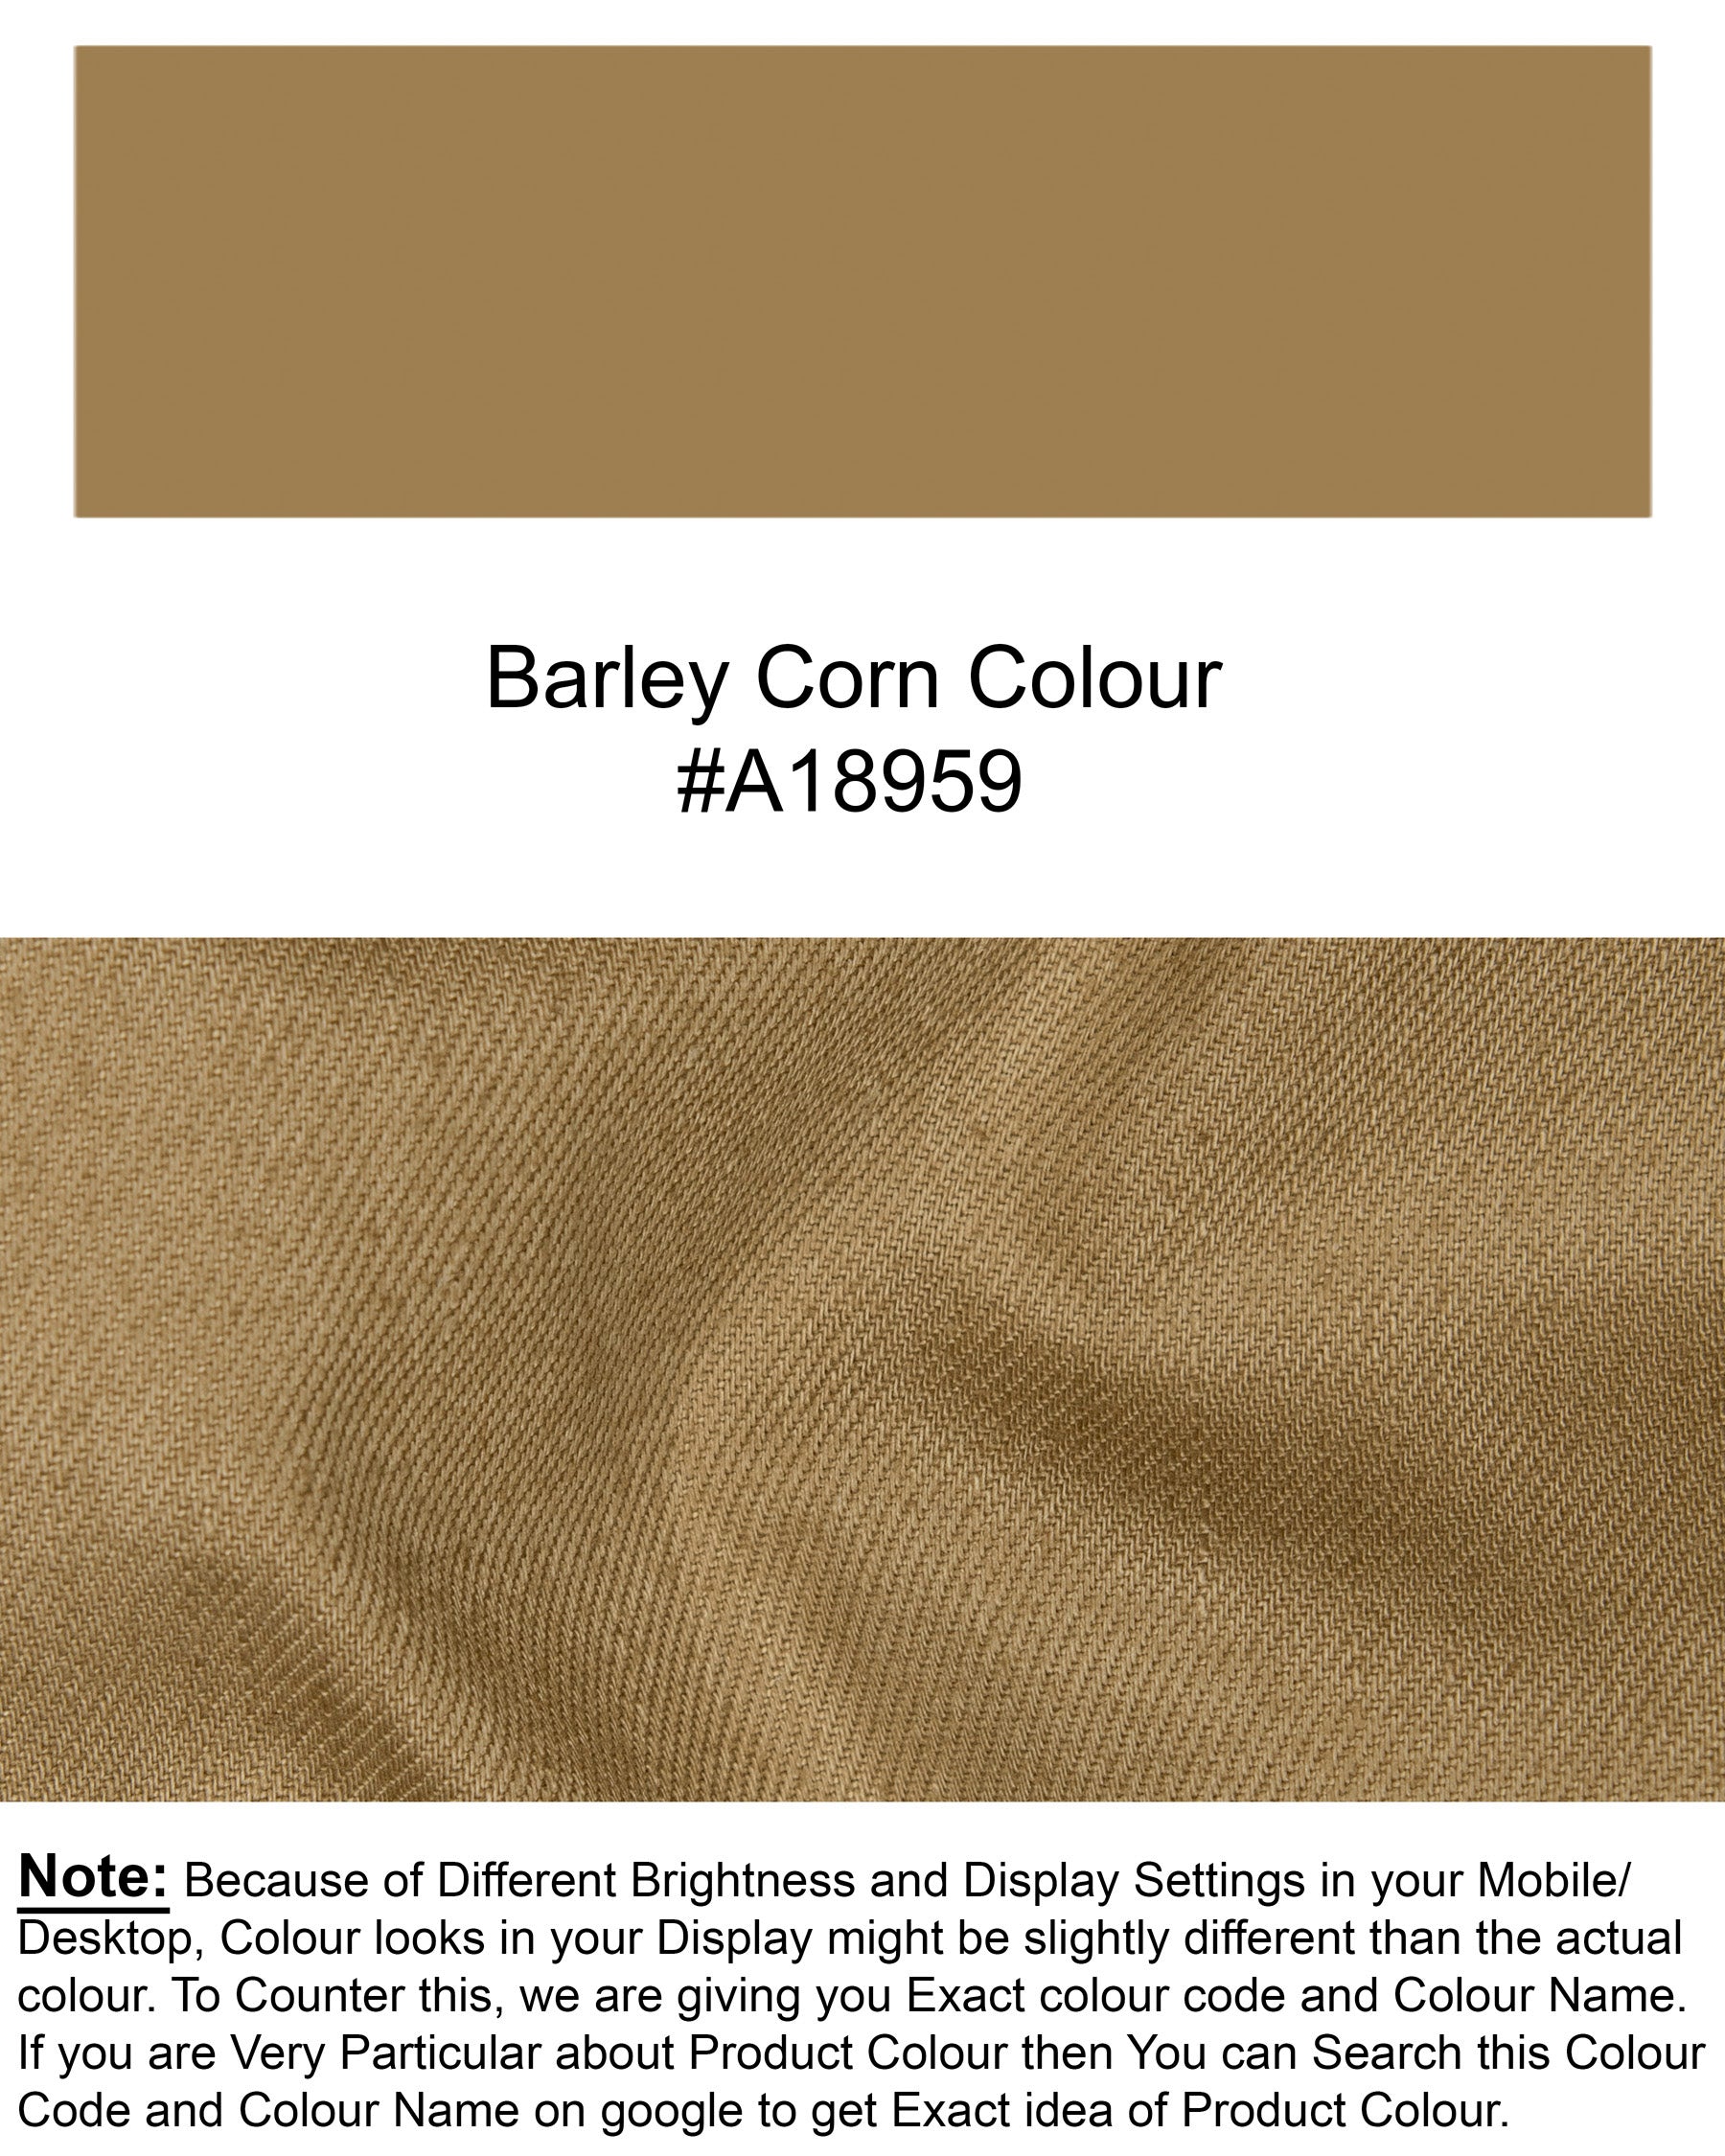 Barley Corn Brown DouSTe Breasted Premium Cotton Suit ST1287-DB-36, ST1287-DB-38, ST1287-DB-40, ST1287-DB-42, ST1287-DB-44, ST1287-DB-46, ST1287-DB-48, ST1287-DB-50, ST1287-DB-52, ST1287-DB-54, ST1287-DB-56, ST1287-DB-58, ST1287-DB-60